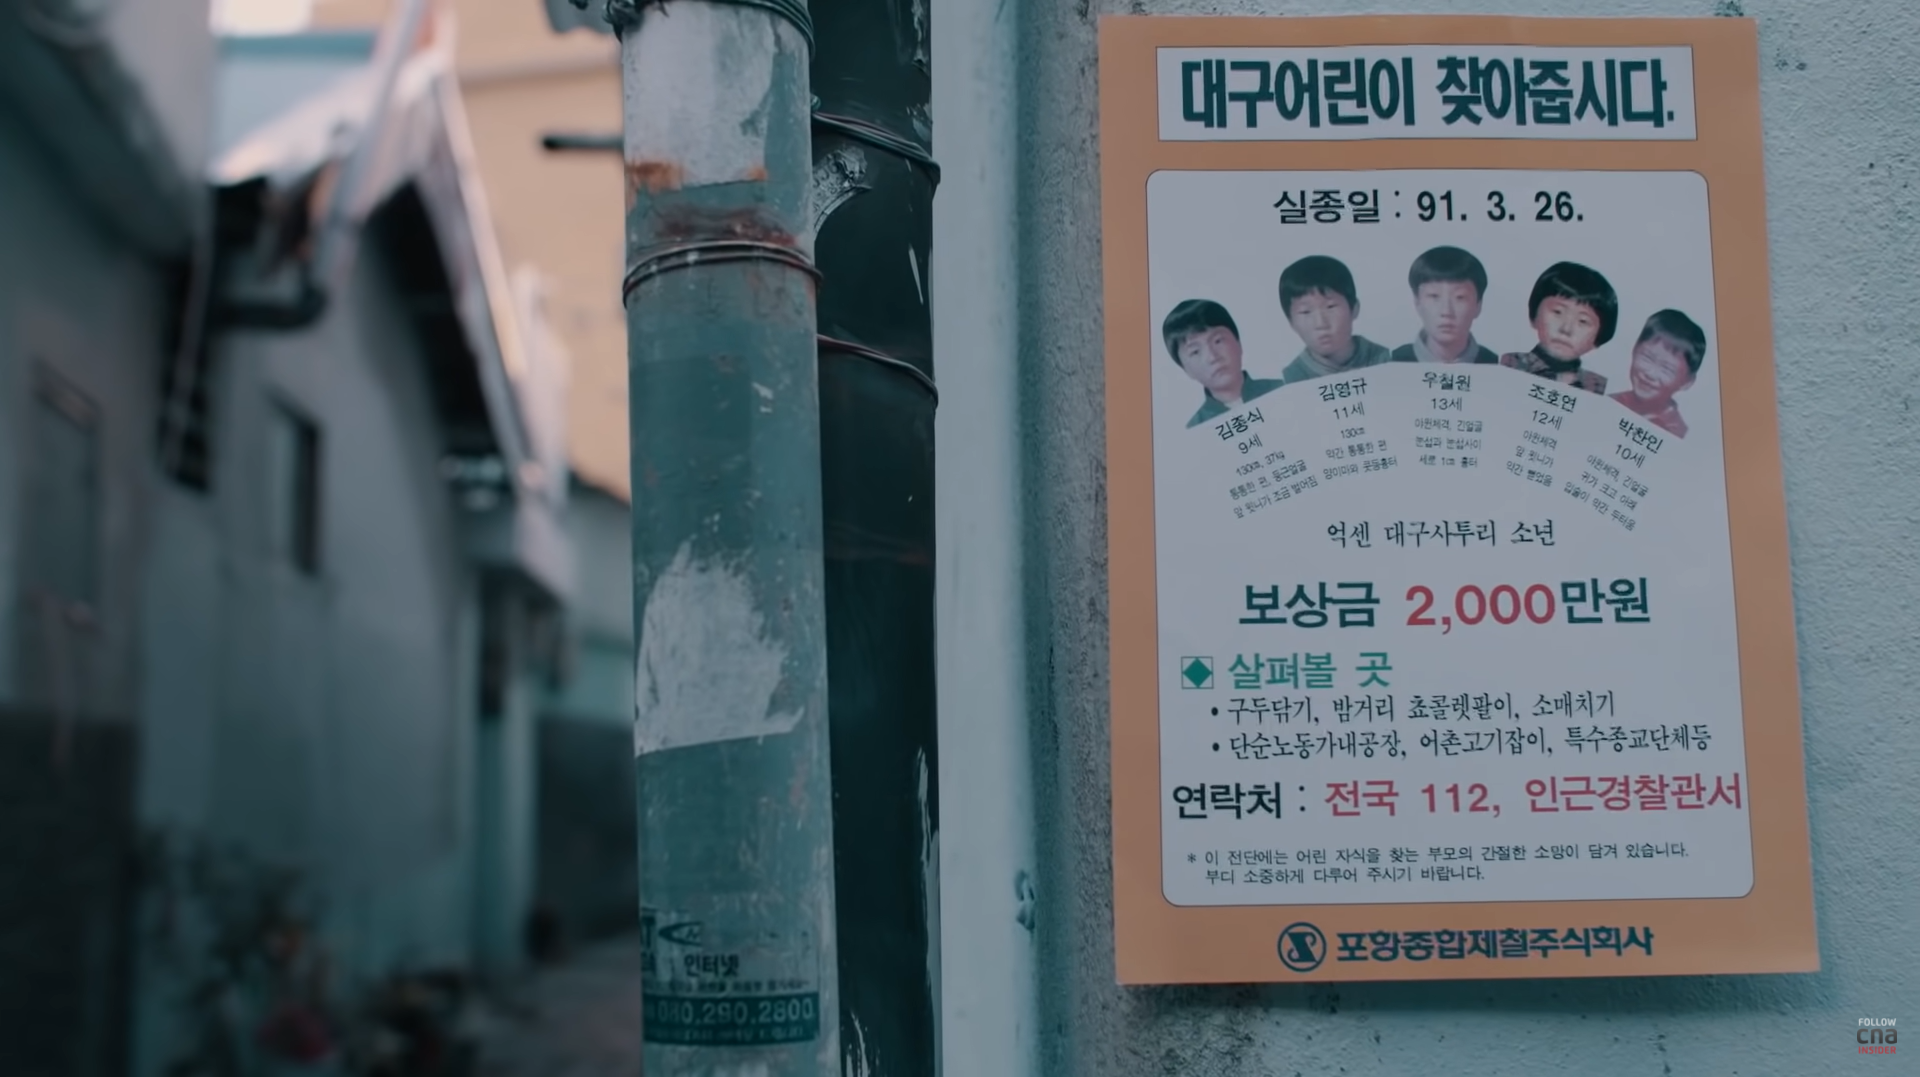 unsolved crimes in korea - frog boys poster